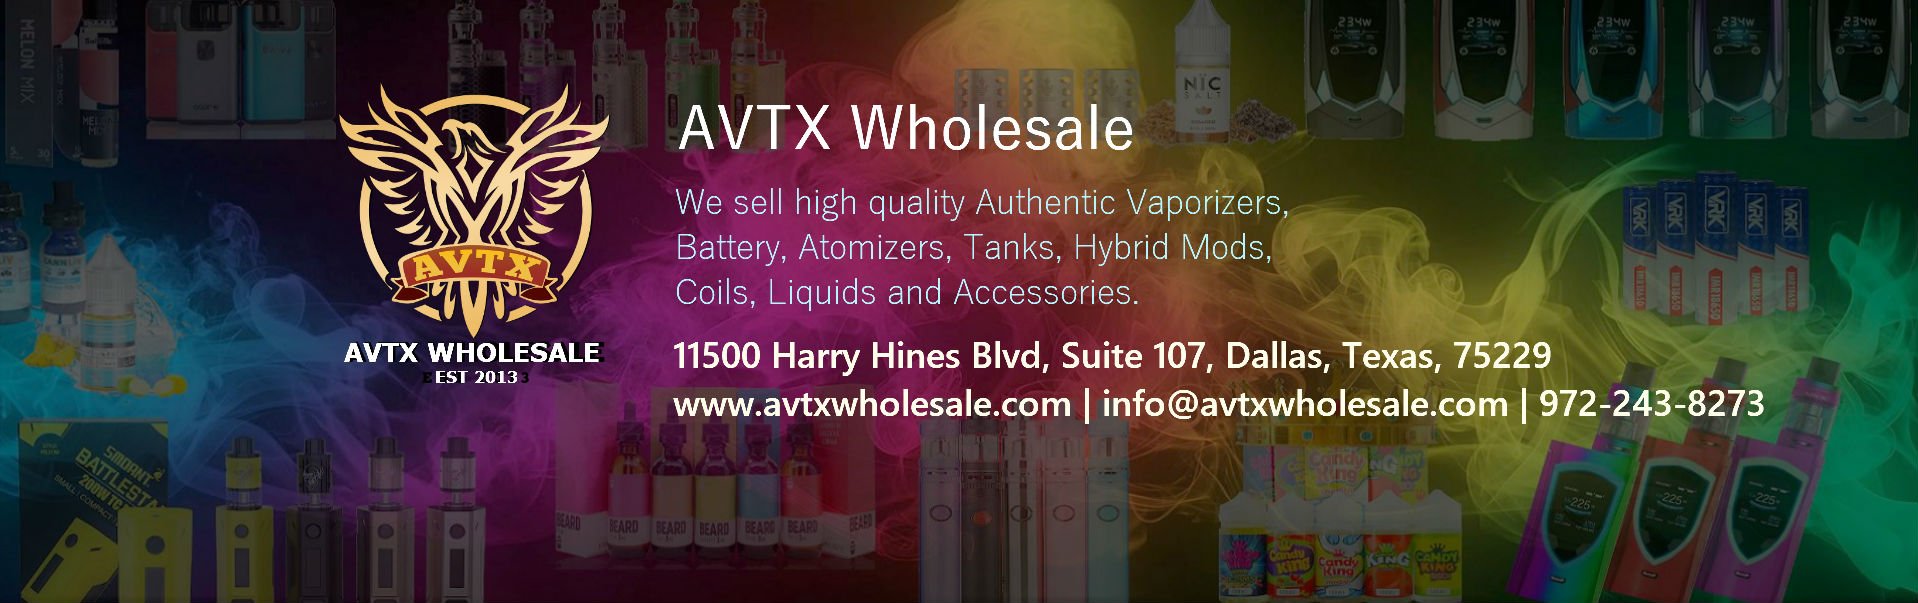 AVTX Wholesale cover